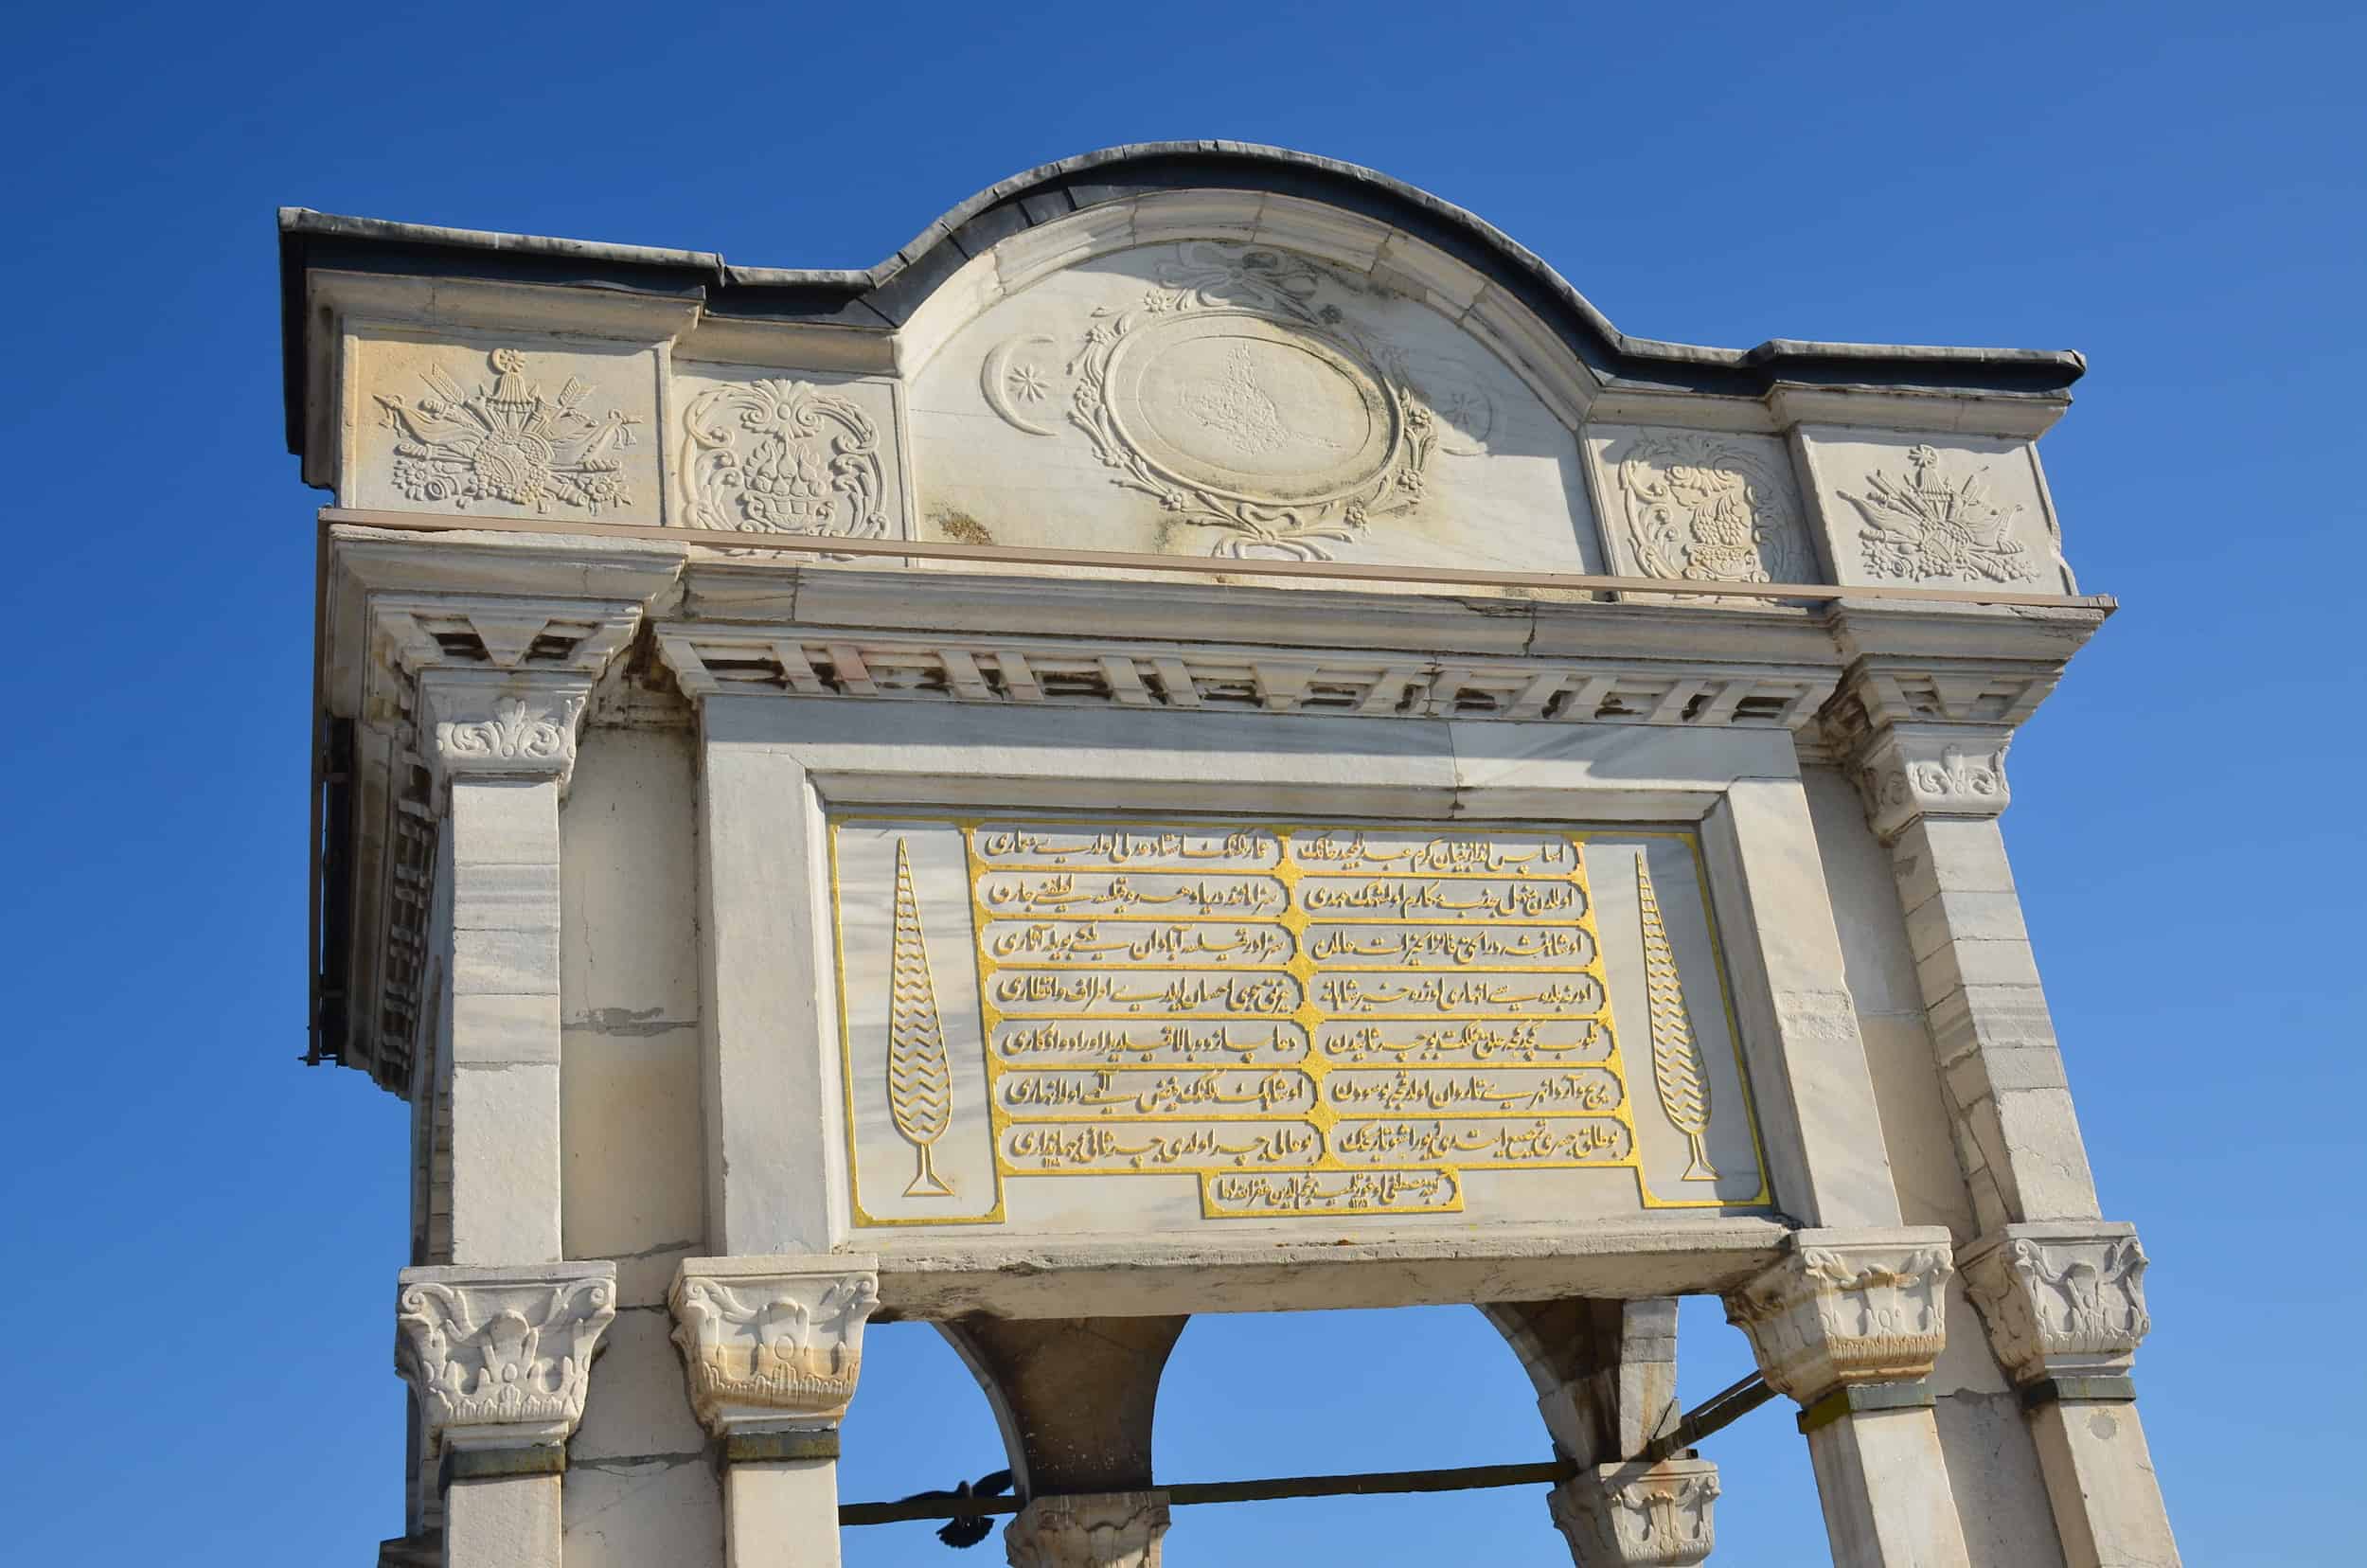 Inscription on the tower on the Meriç Bridge in Edirne, Turkey